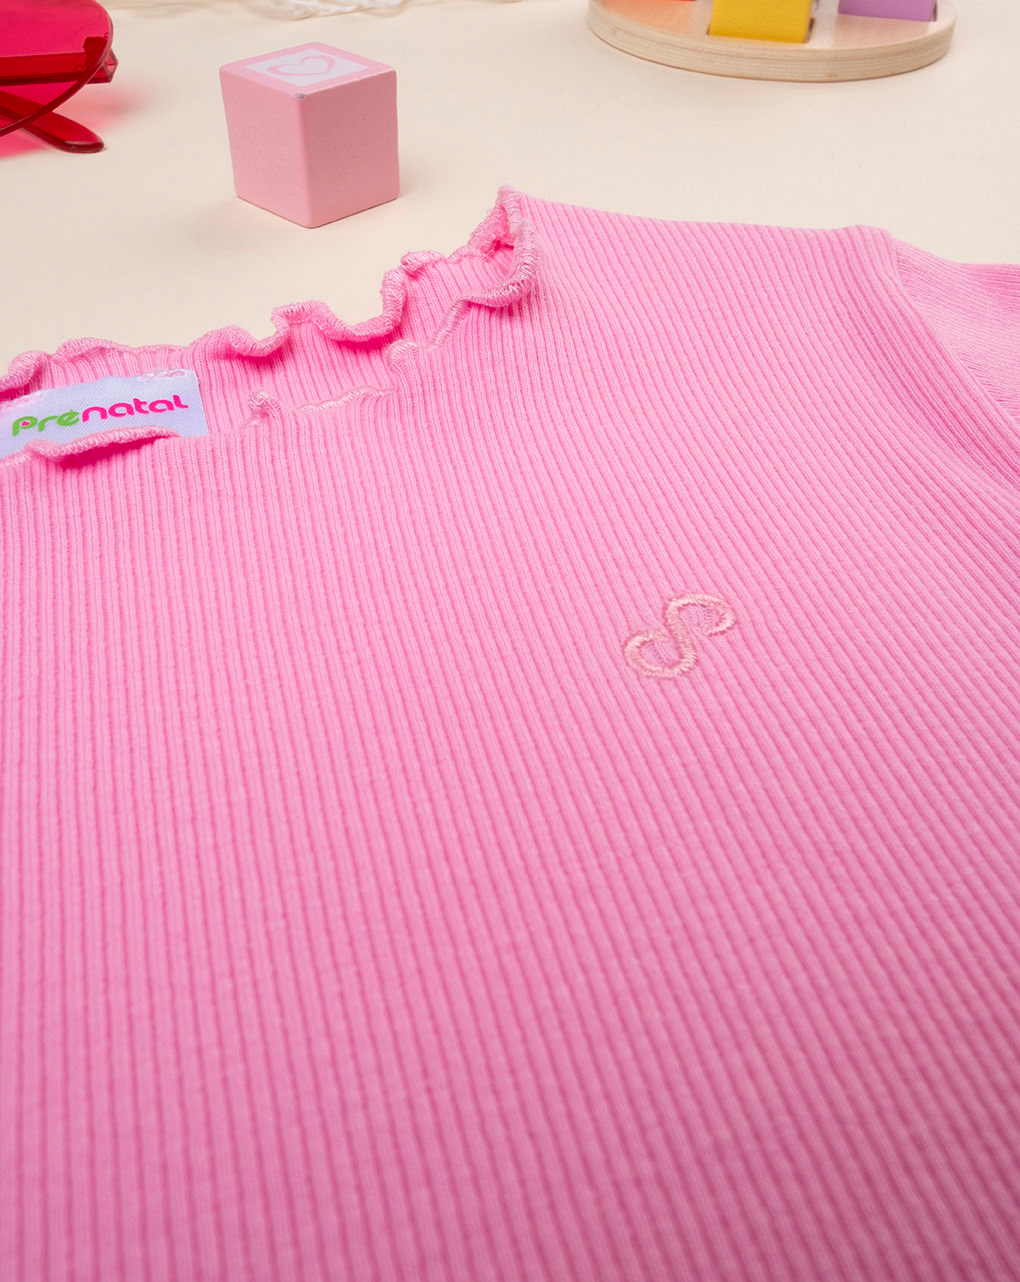 Camiseta rosa de manga corta para niña - Prénatal